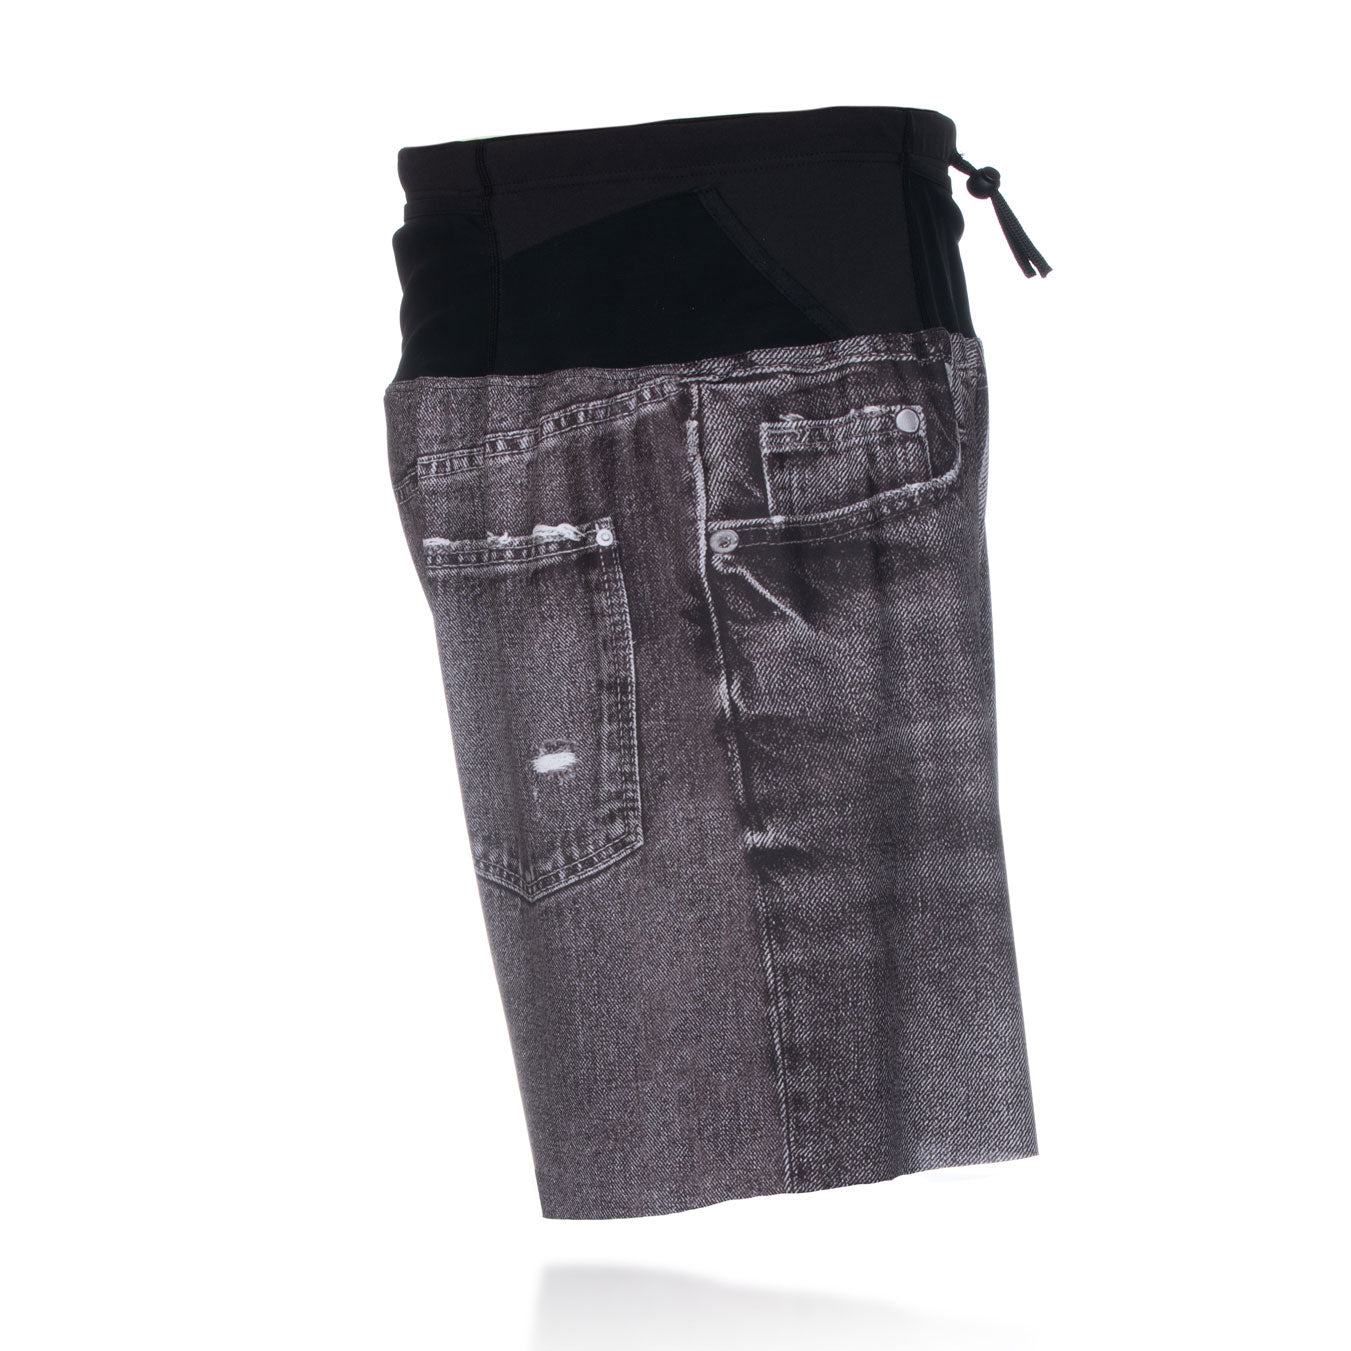 Shorts - Black Jeans